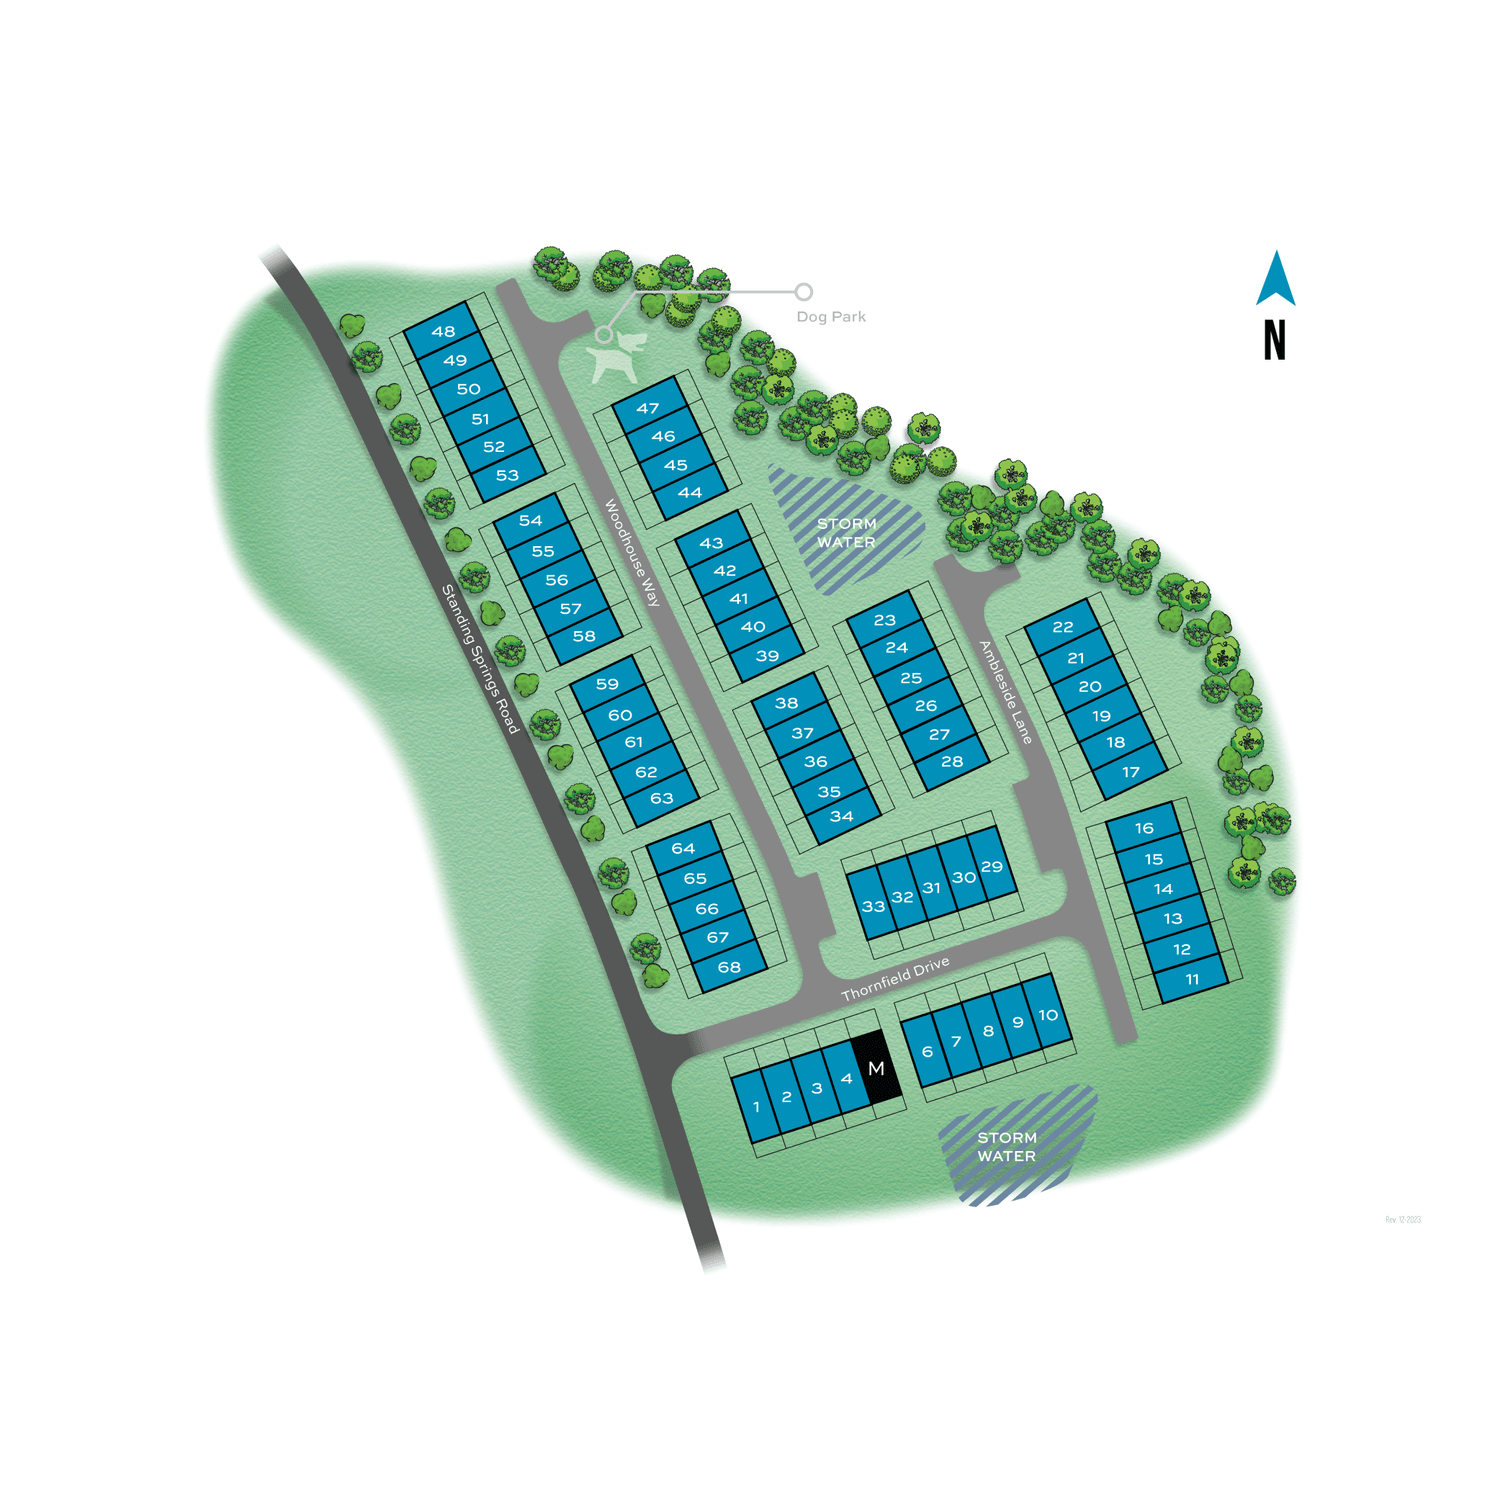 6. Camden Cottages建於 10 Thornfield Drive, Greenville, SC 29605